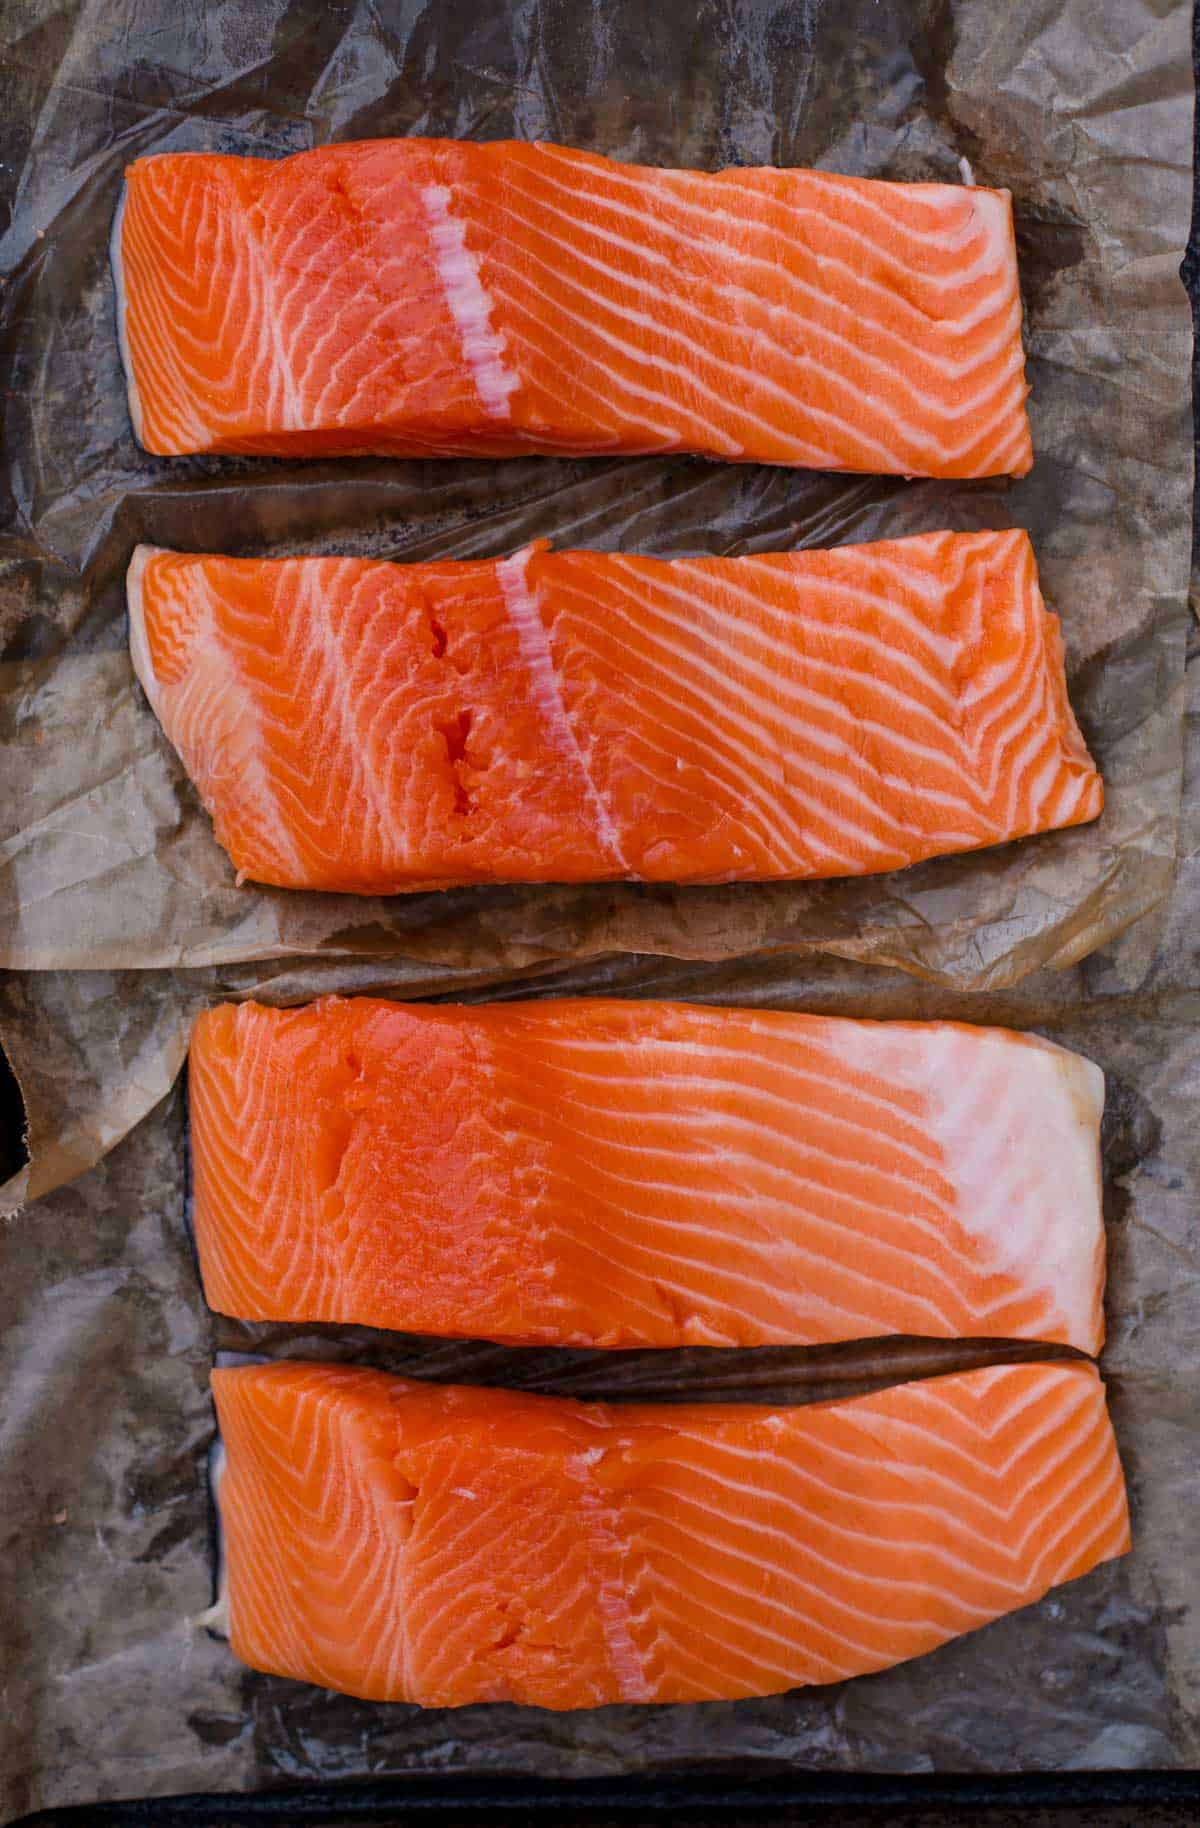 4 raw salmon fillets